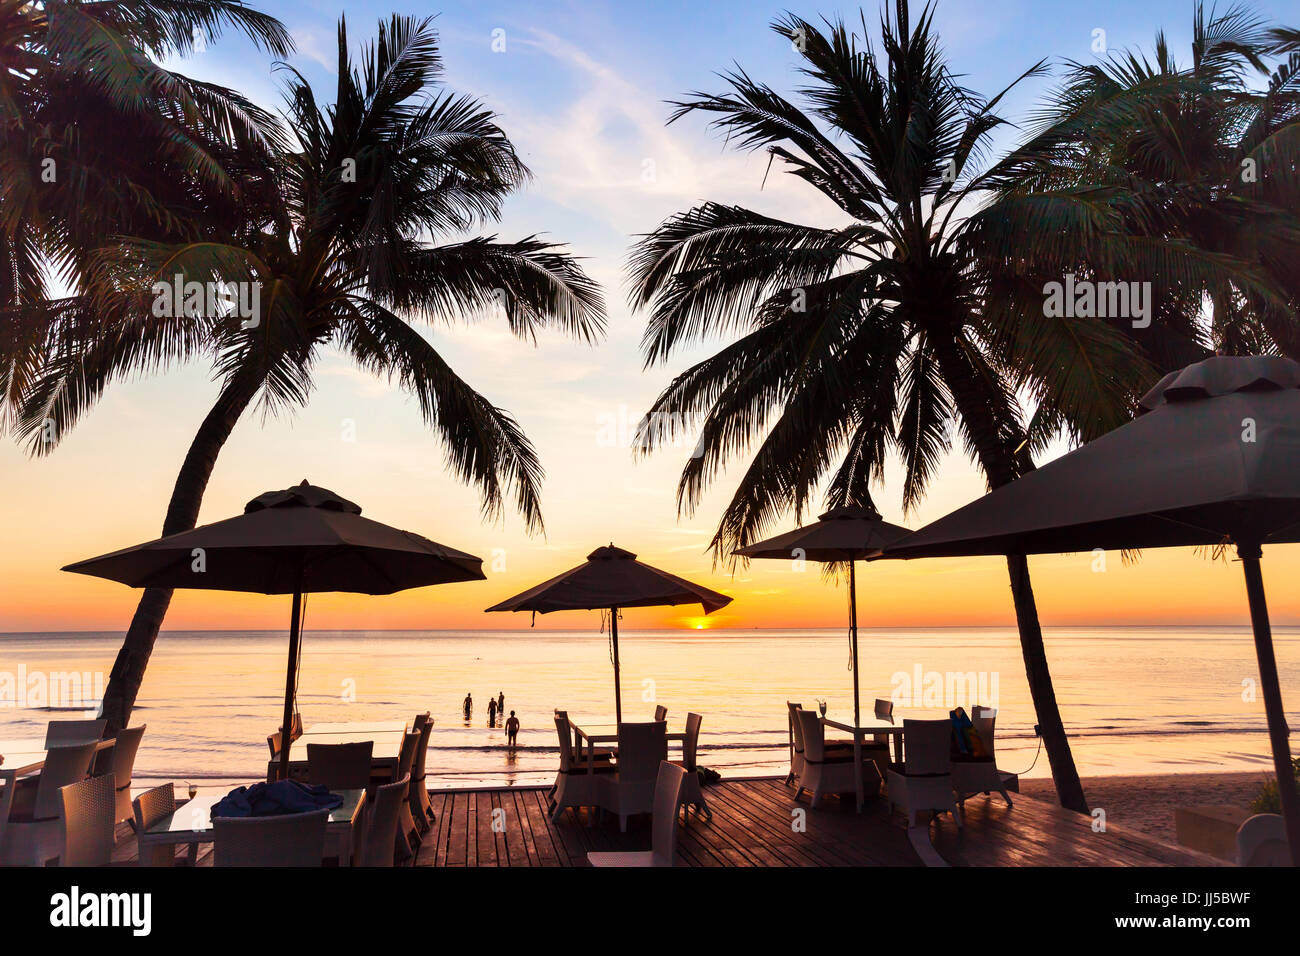 beach restaurant at sunset on tropical island Stock Photo